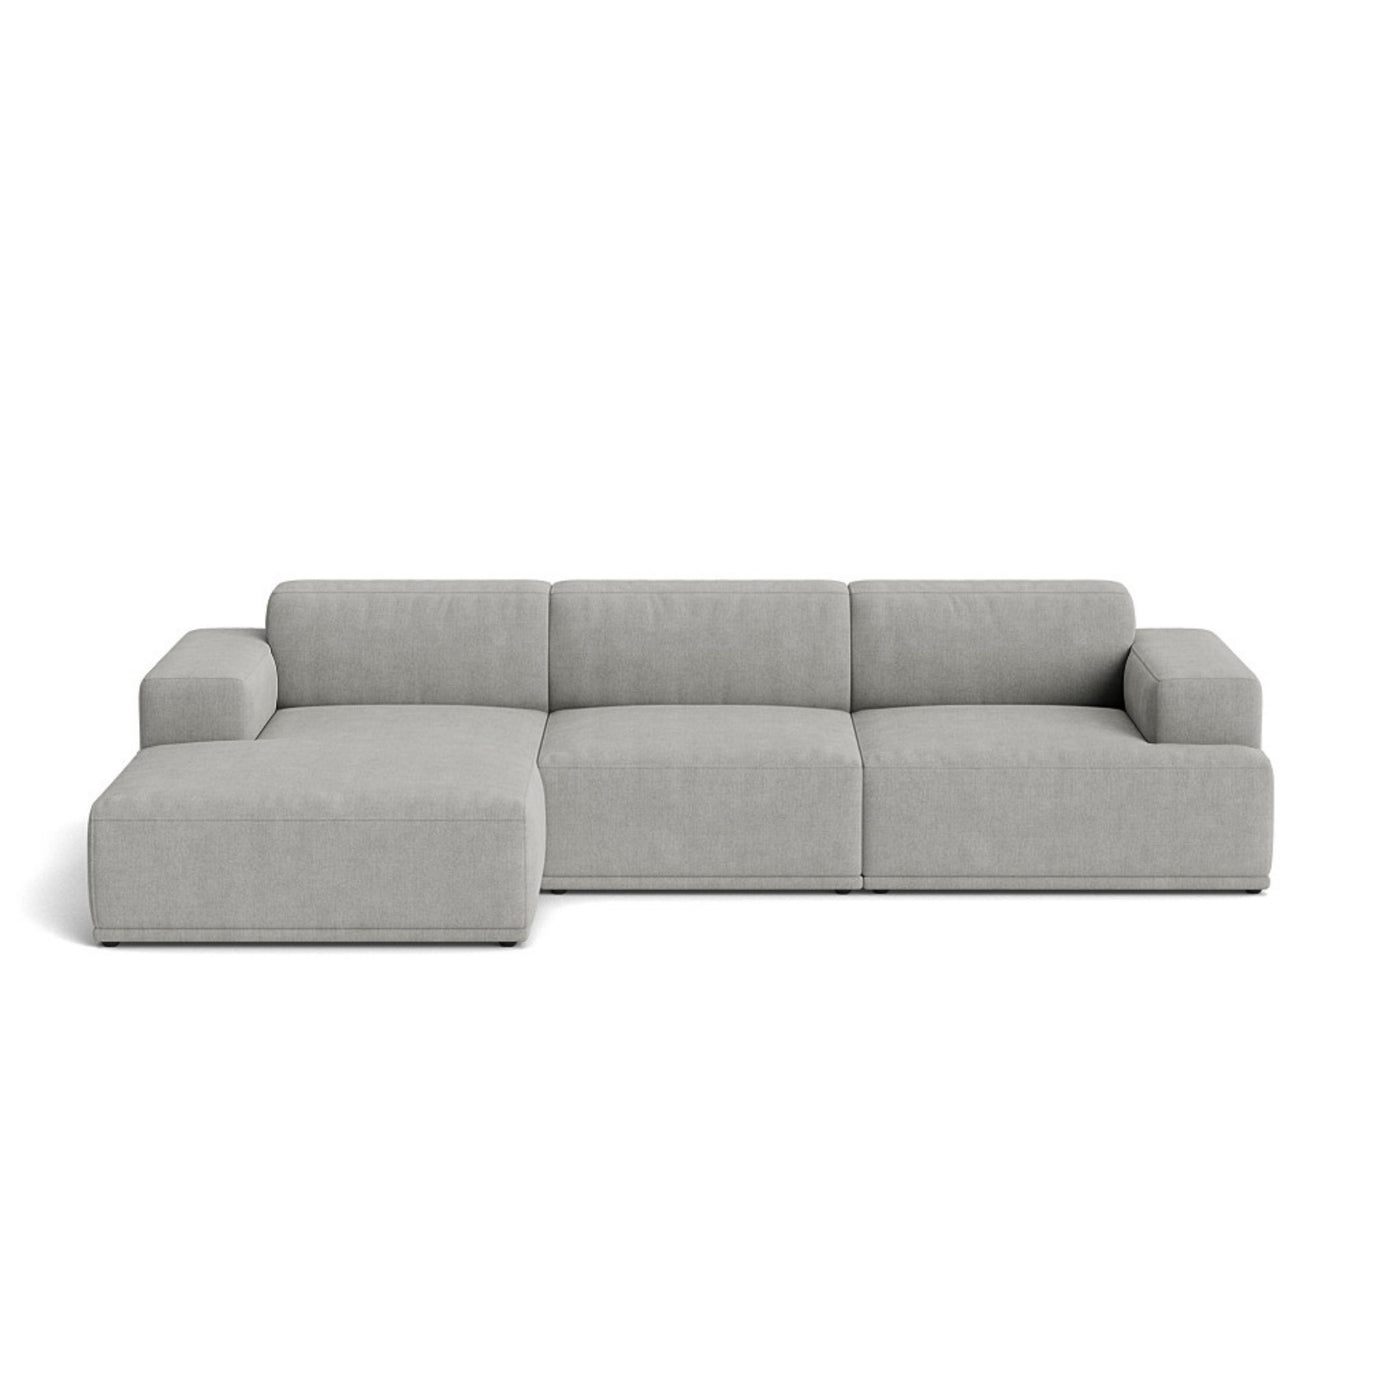 Muuto Connect Soft 3 Seater Sofa | Modular Configuration 2 – someday ...